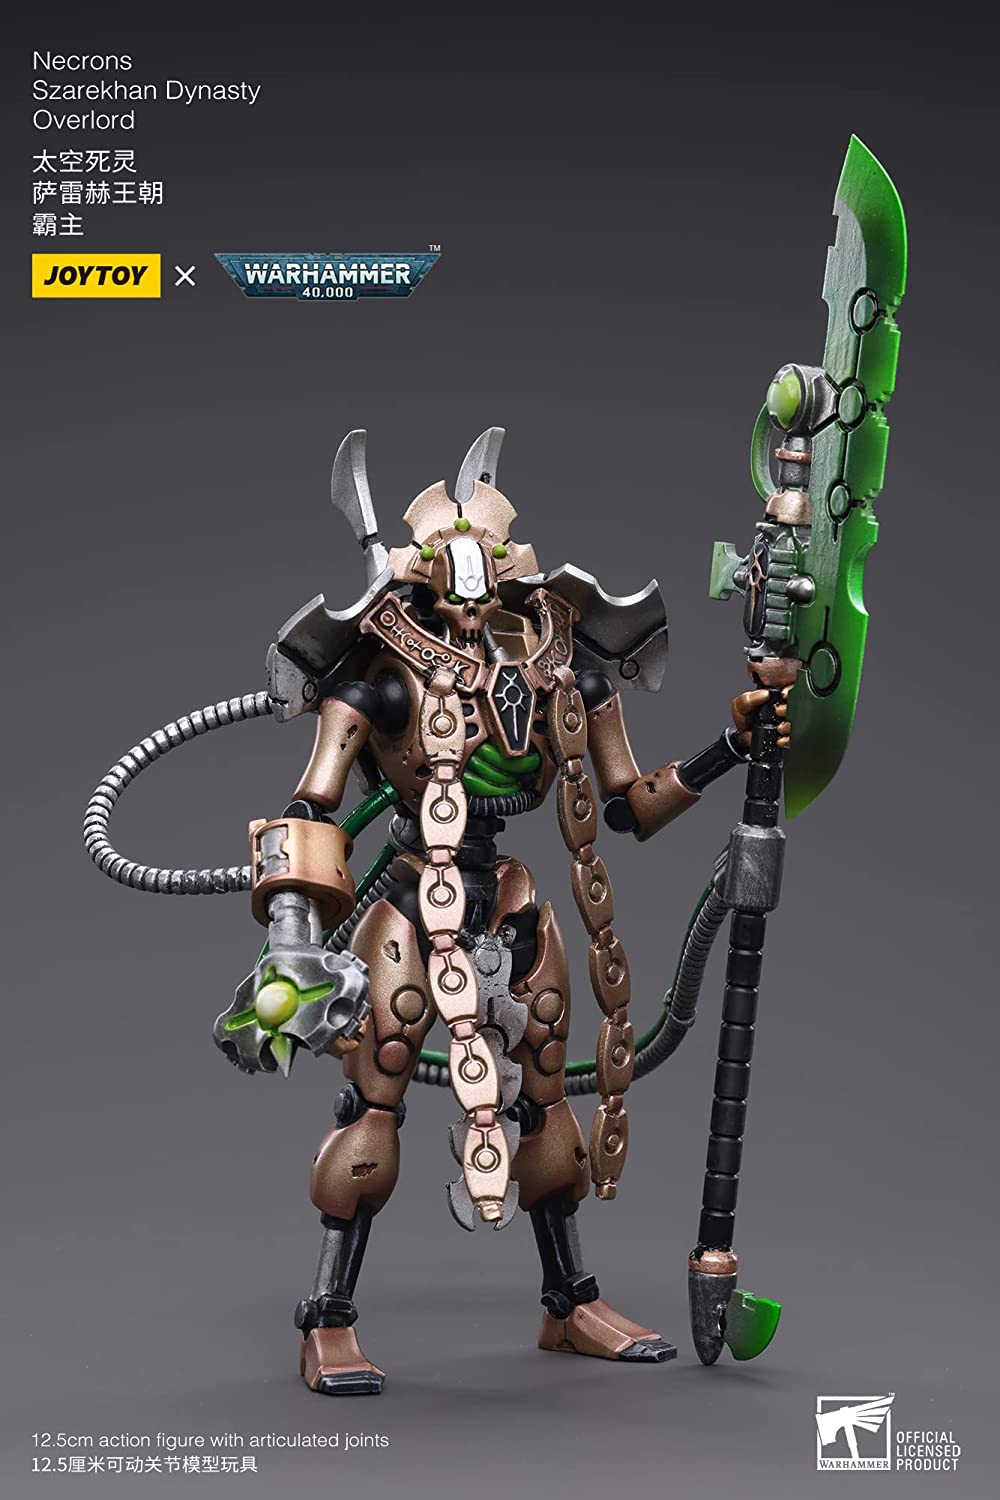 [JoyToy] Warhammer 40k: Necrons Szarekhan Dynasty Overlord 1:18 Scale Action Figure JT4133-1683896452.jpg